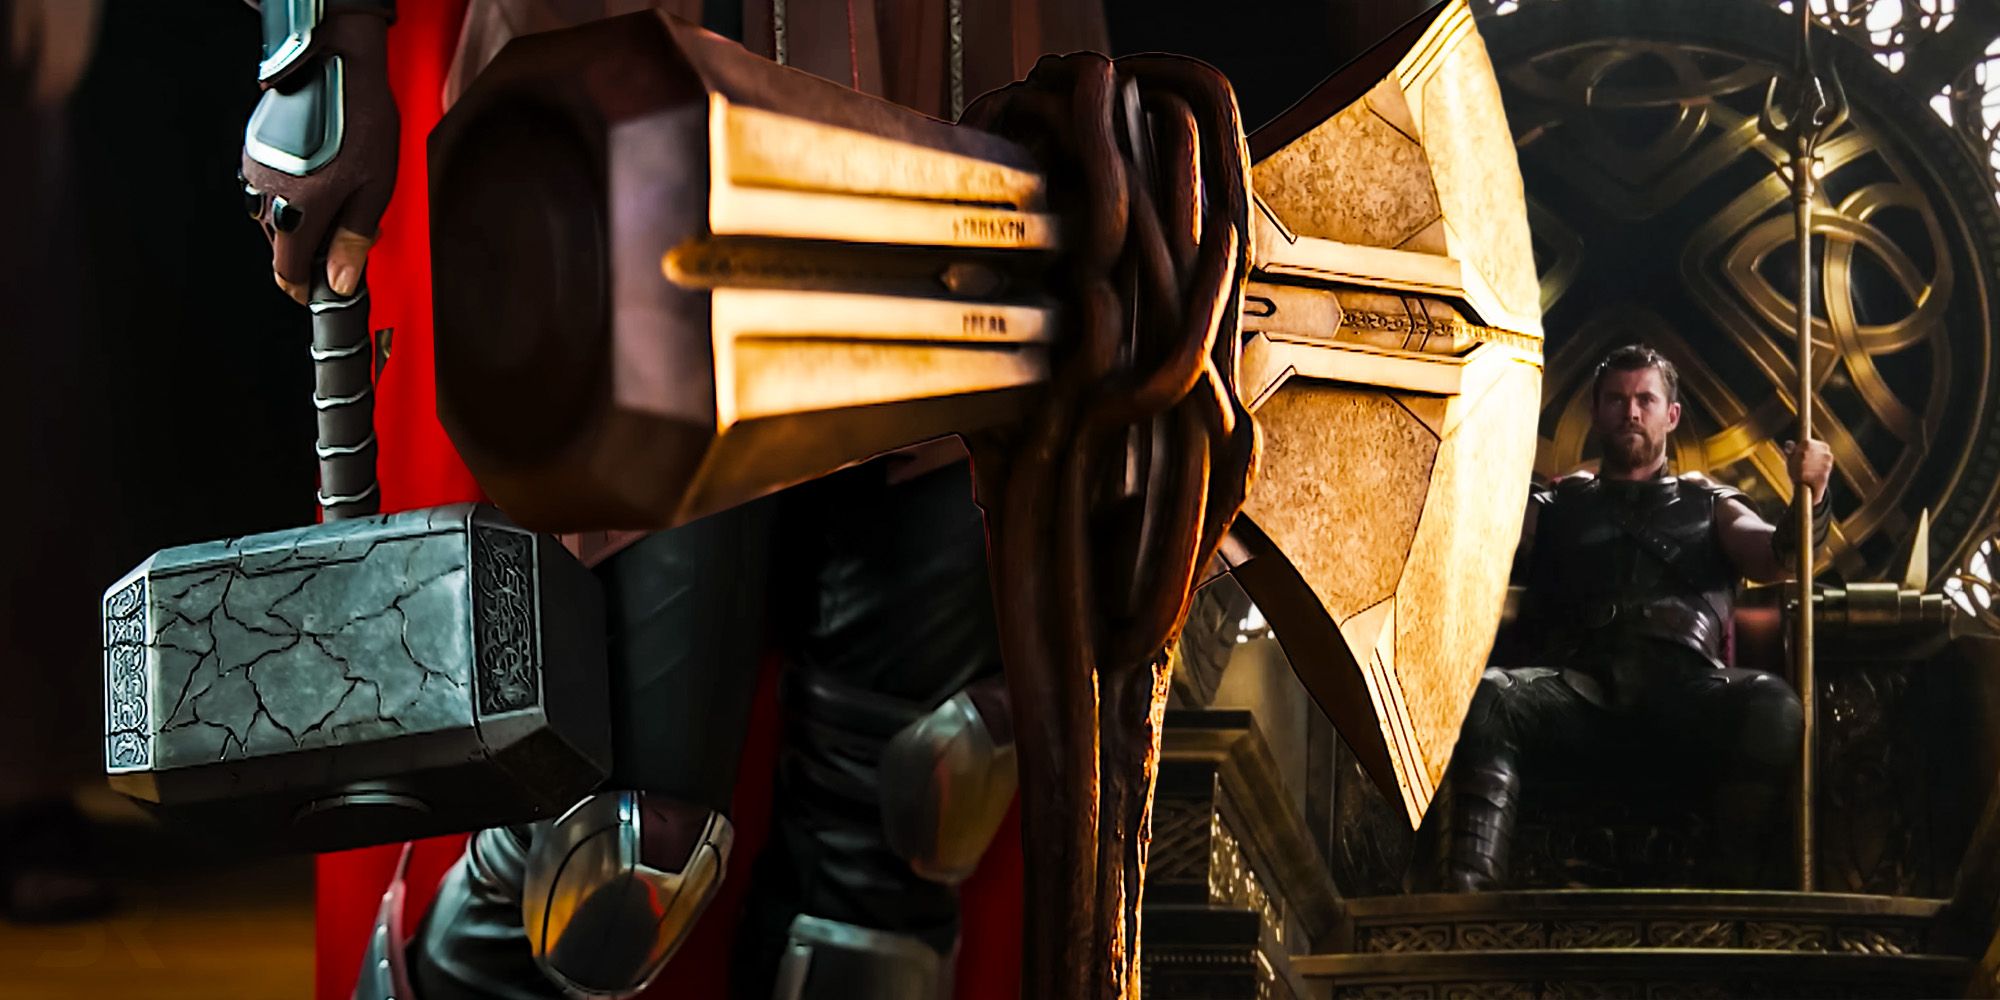 Mjolnir, Gungnir, and Stormbreaker - important Asgardian weapons from Thor.